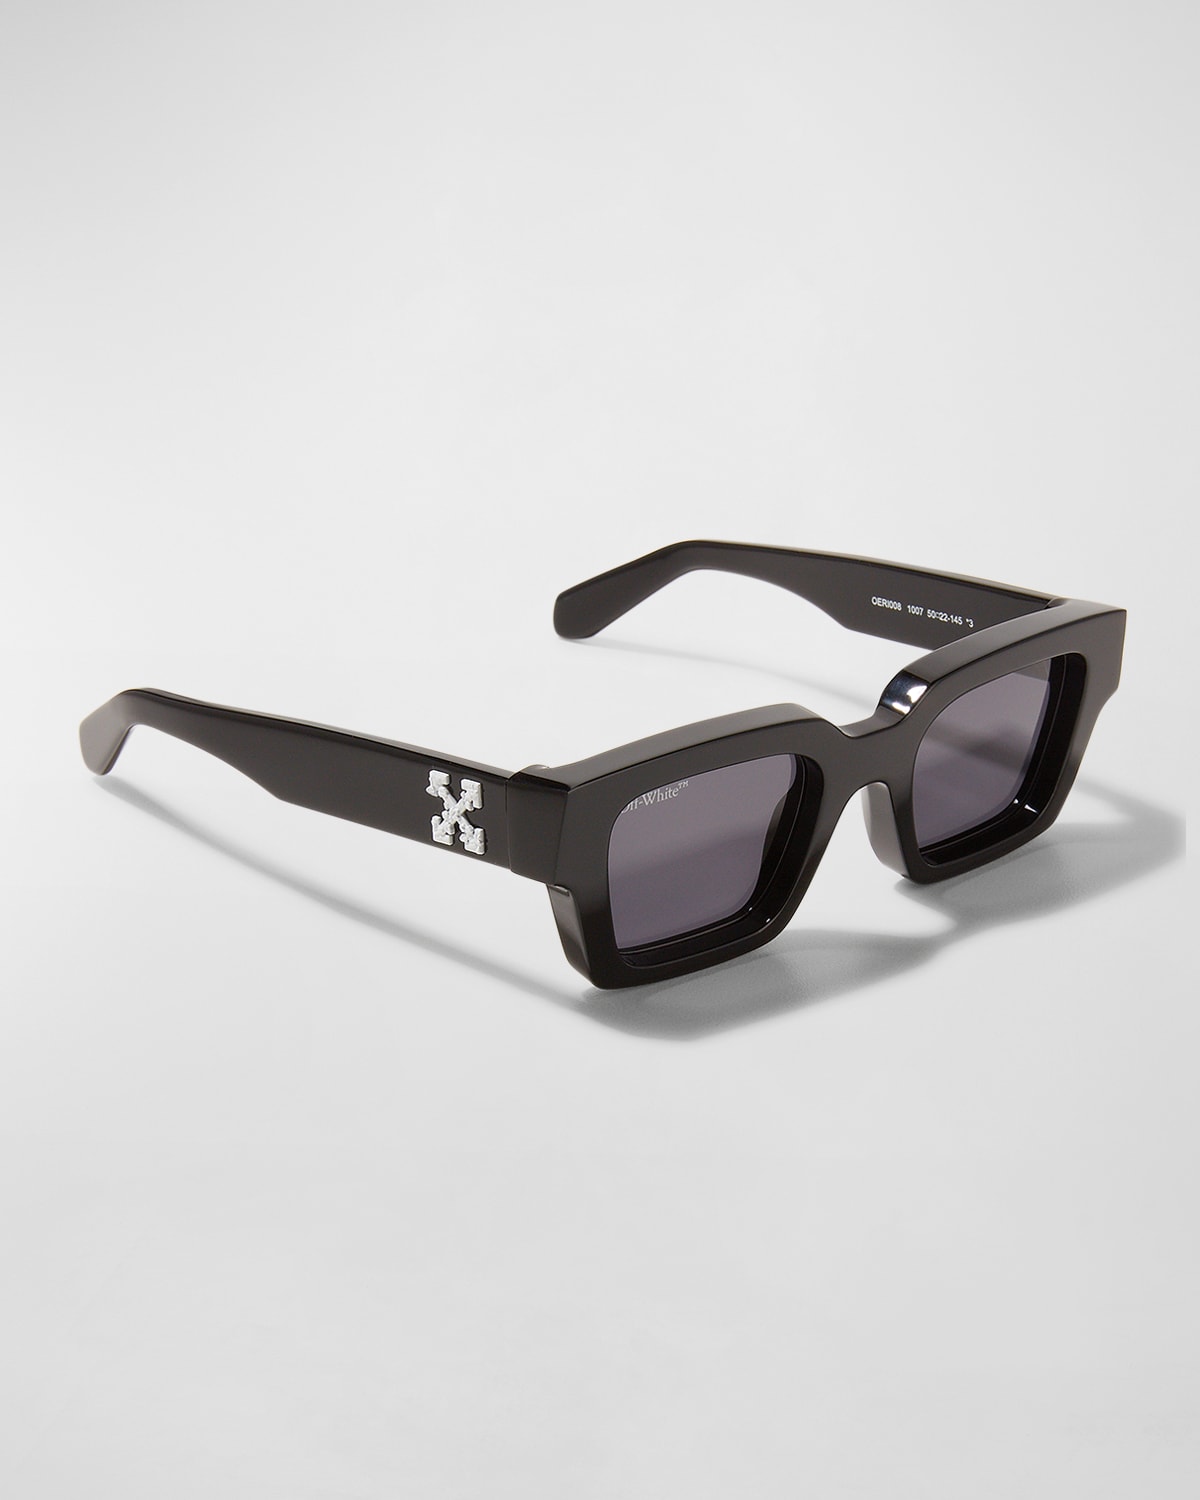 Offwhite Sunglasses Neiman Marcus